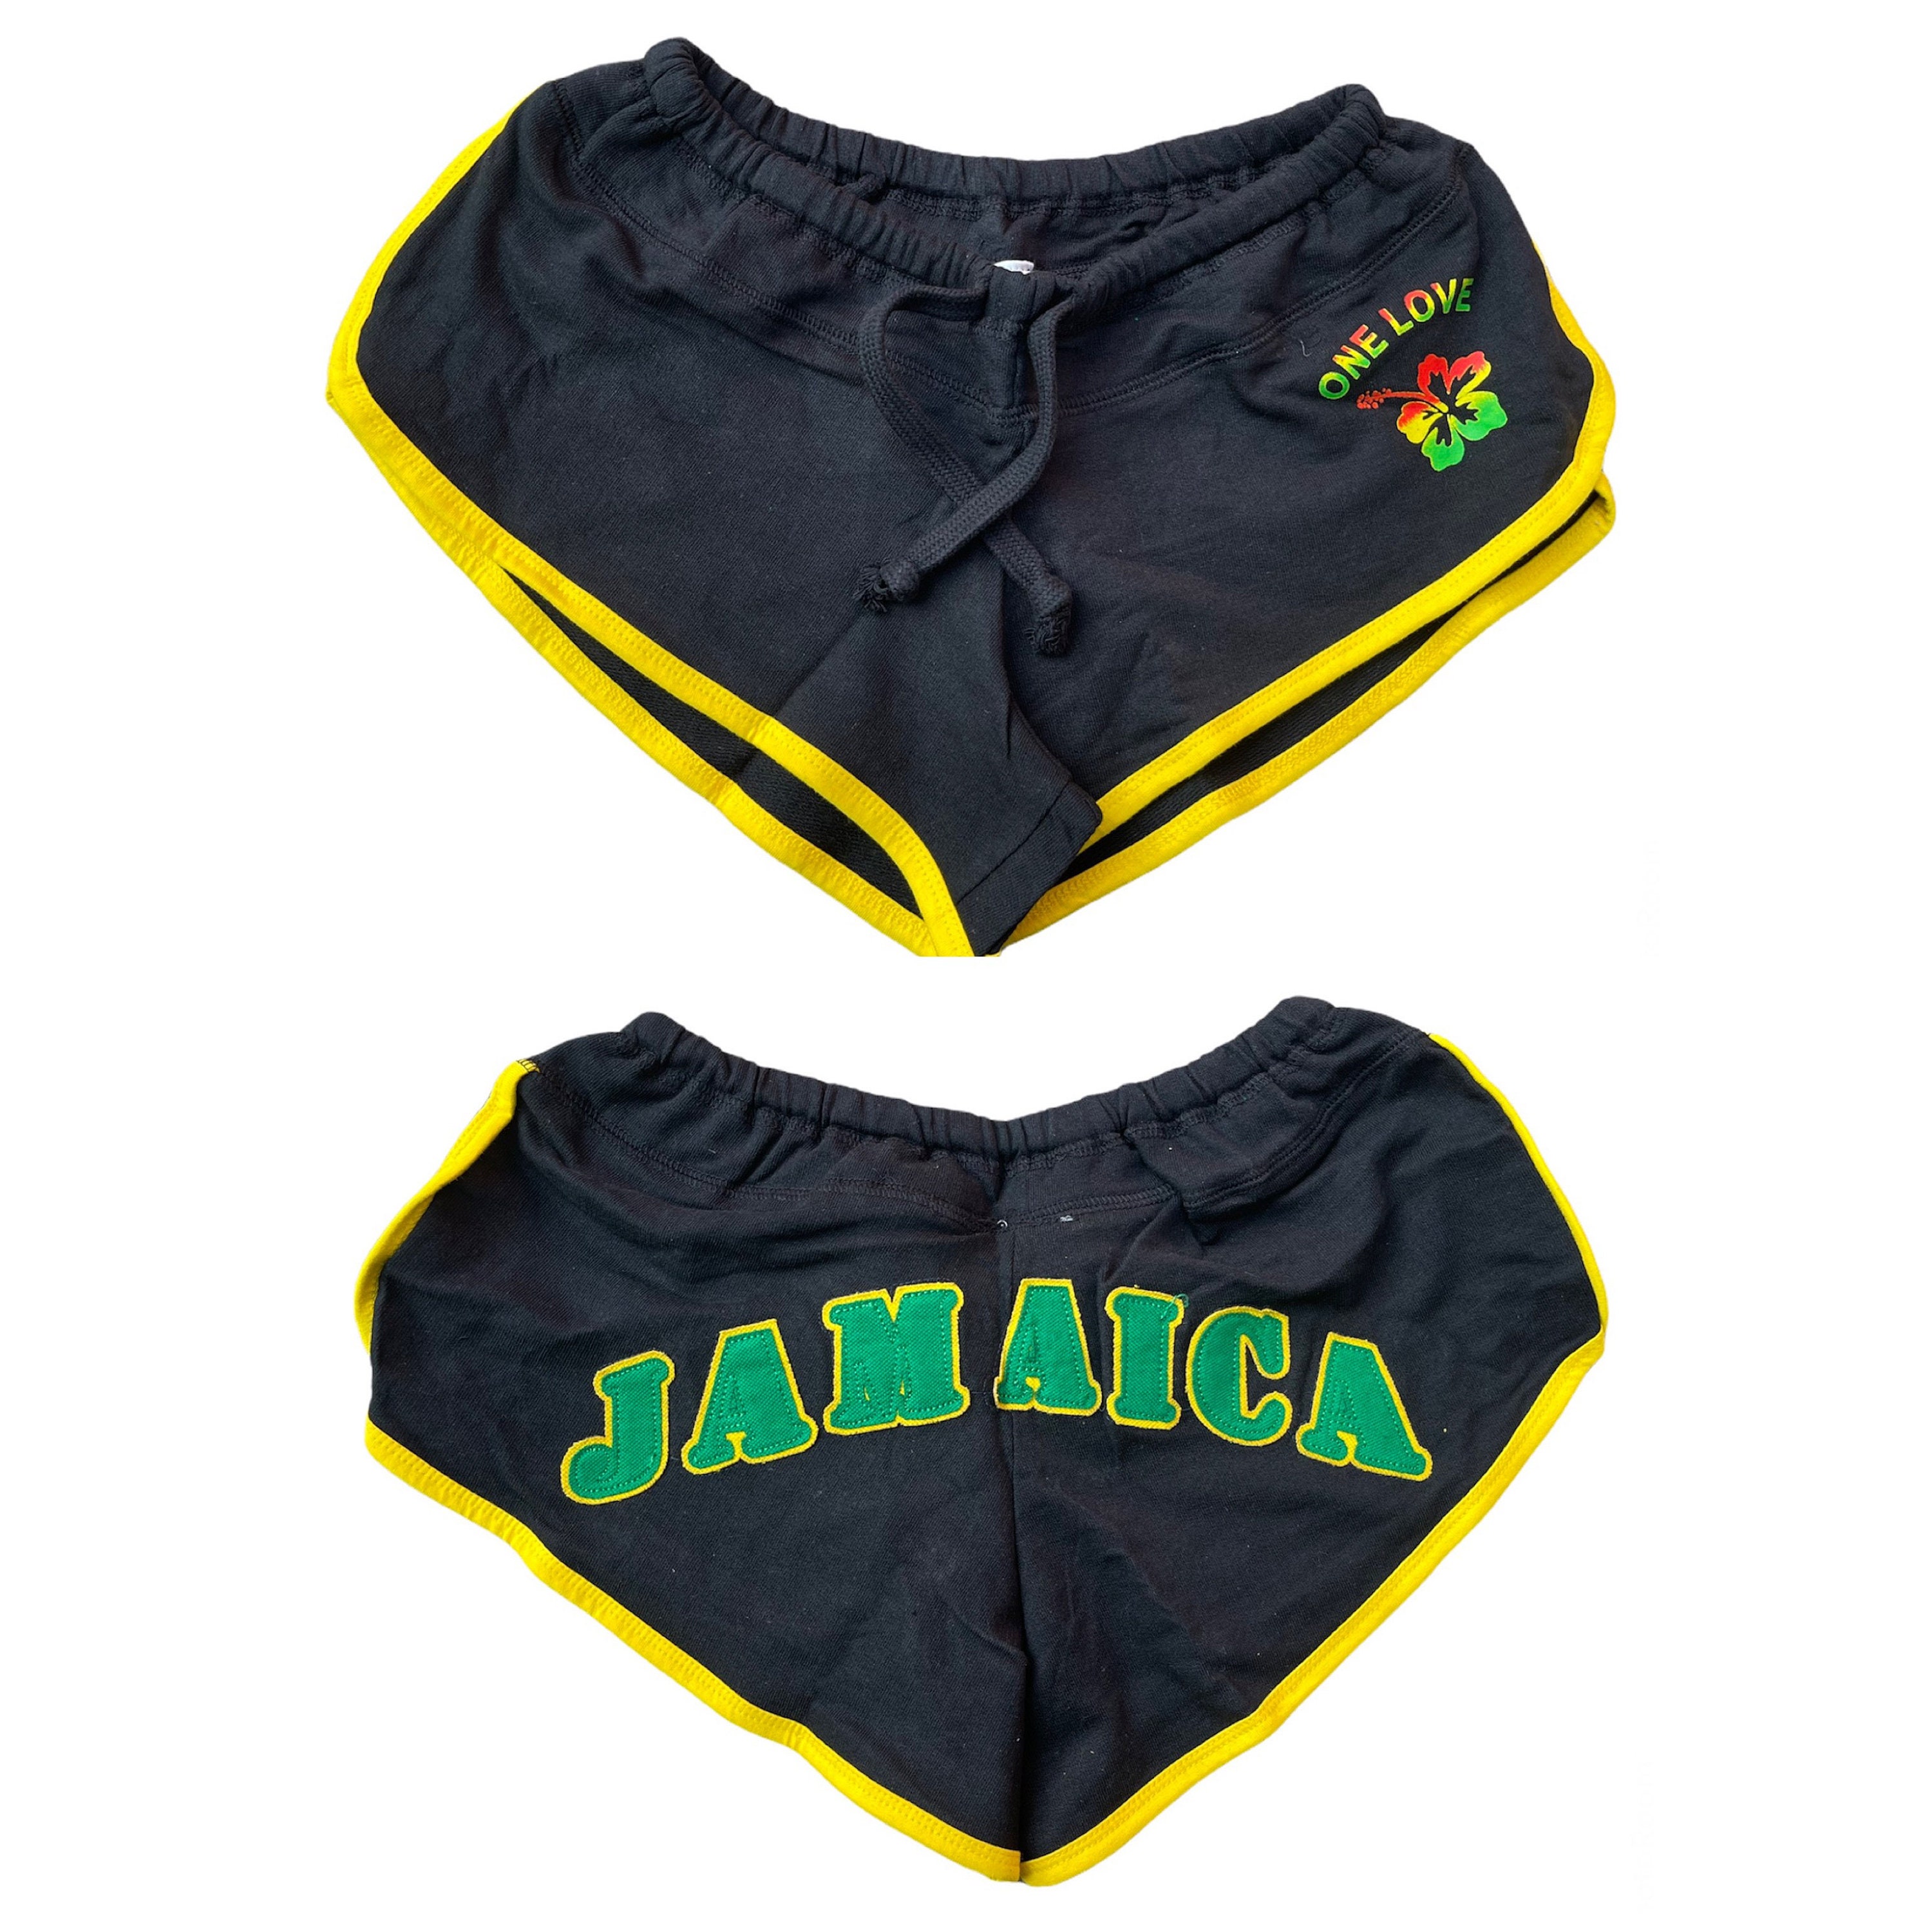 dan doyle add jamaican pum pum shorts photo